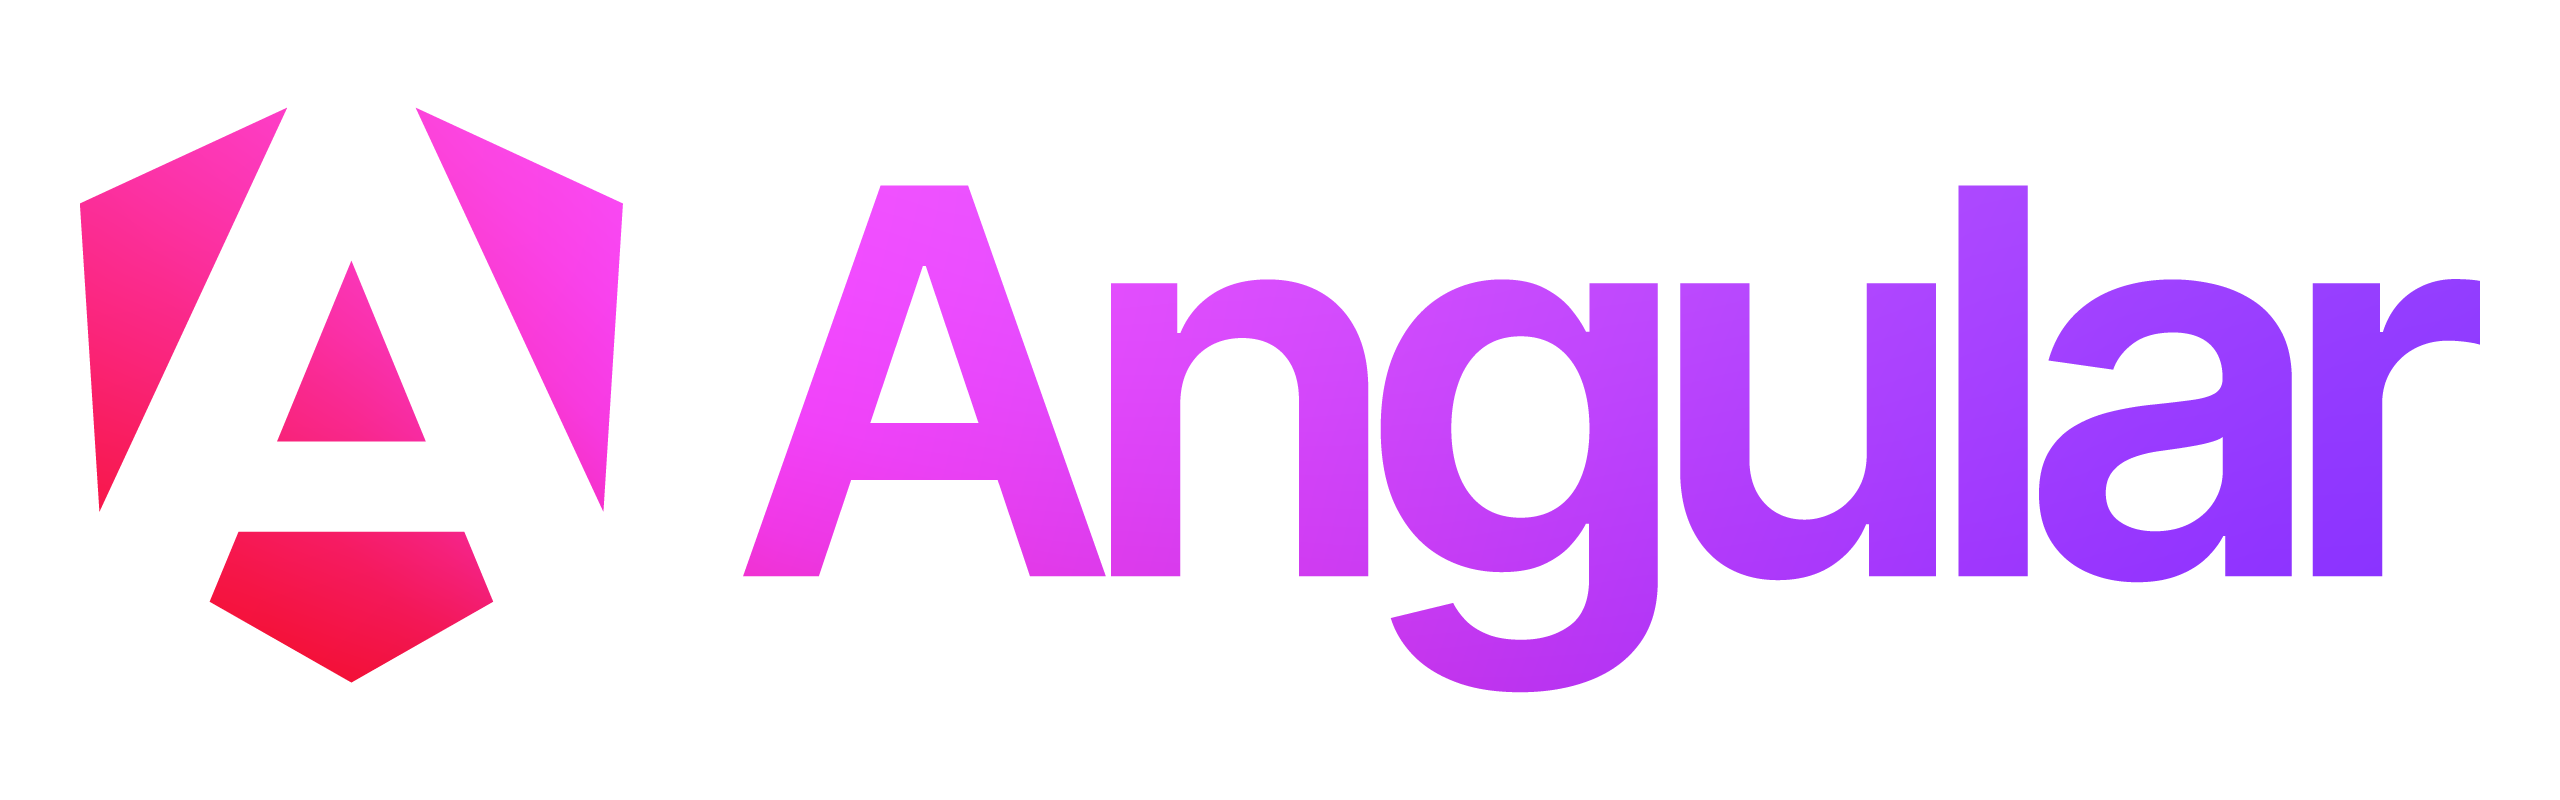 Angular wordmark gradient logo